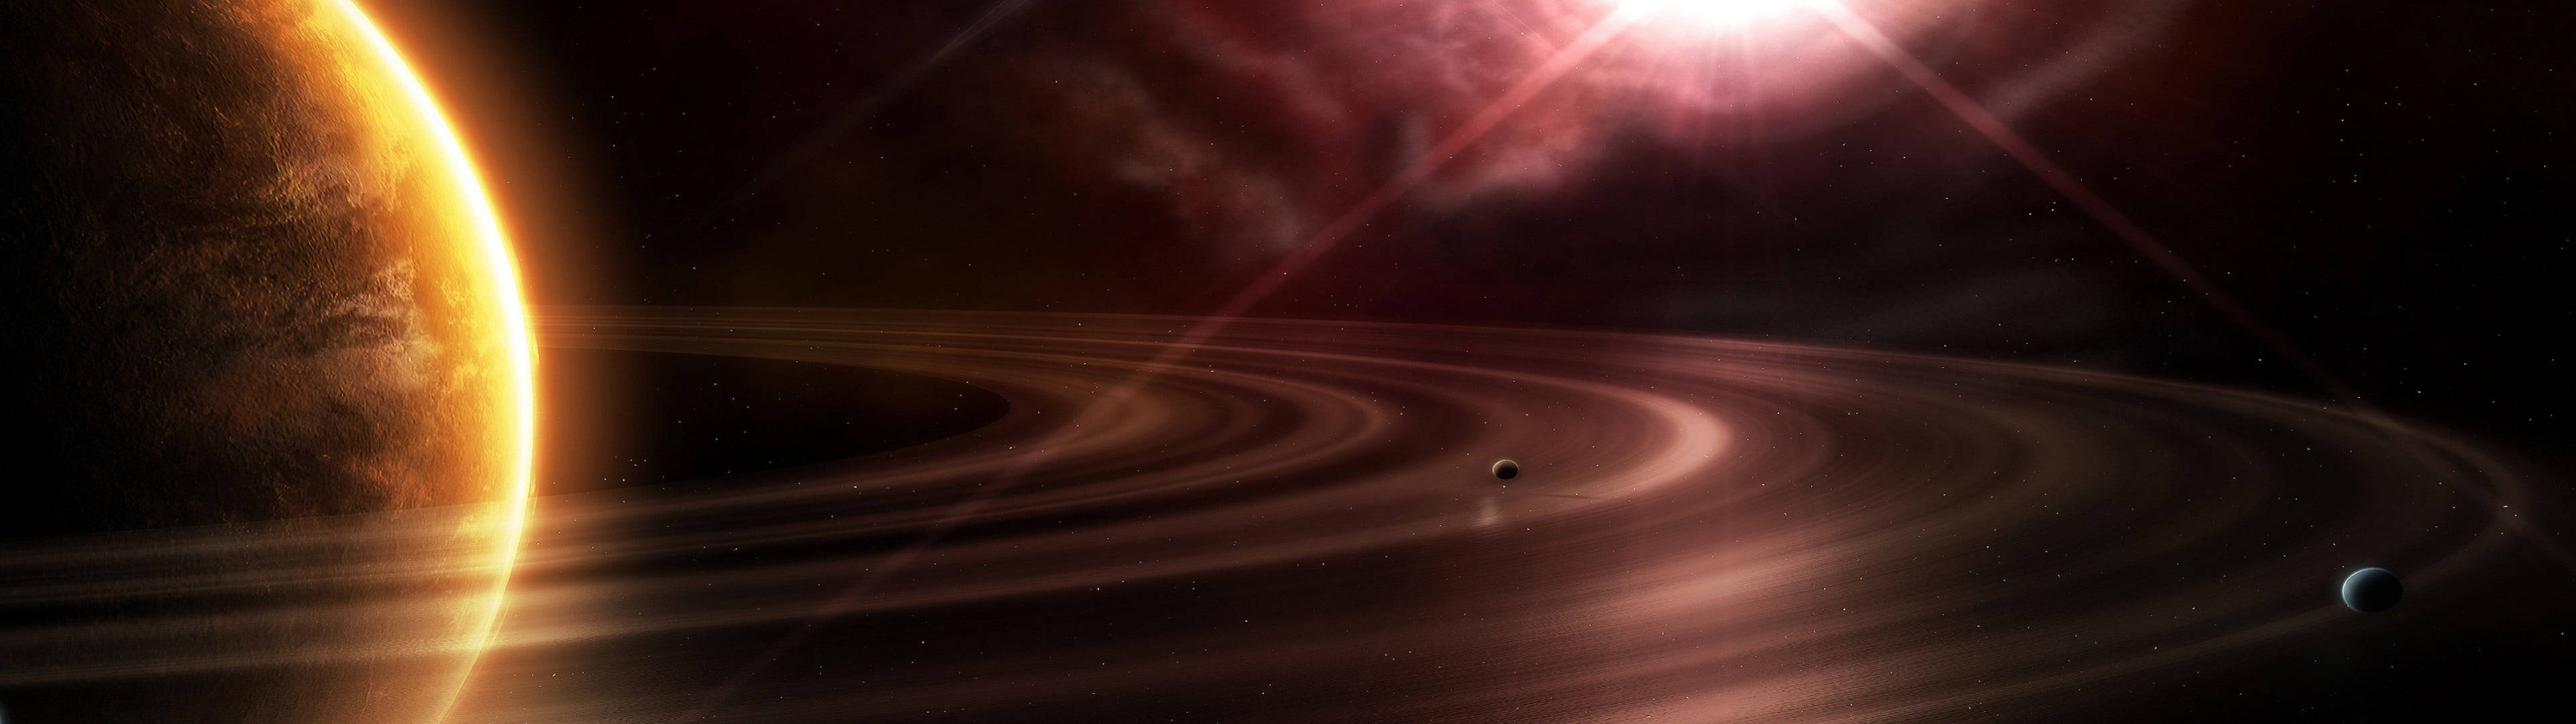 Giant Saturn 4k Background